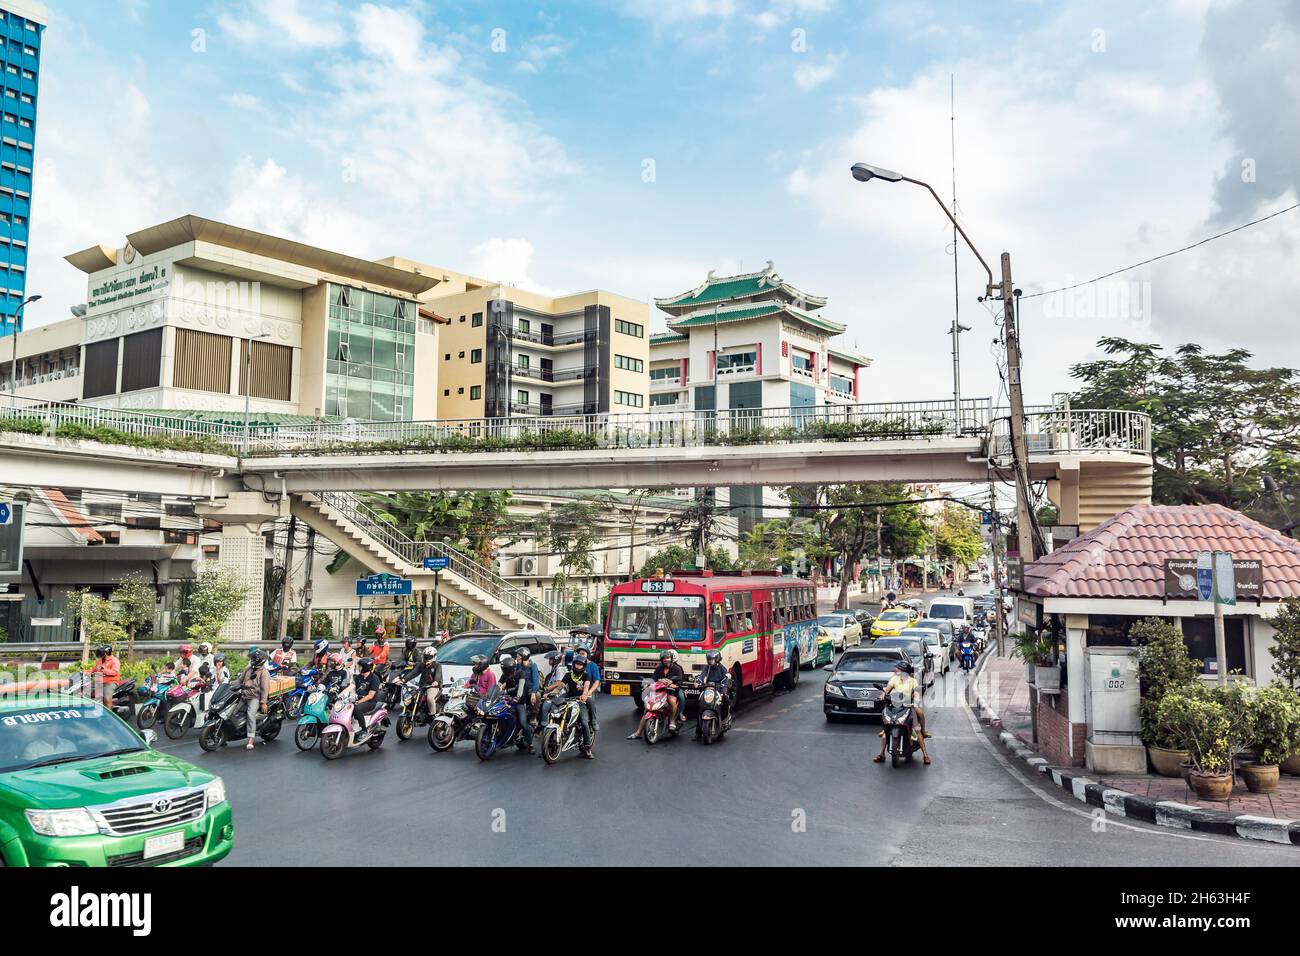 Mopeds, Busse und Autos warten an der Ampel, Straßenszene, bangkok, thailand, asien Stockfoto